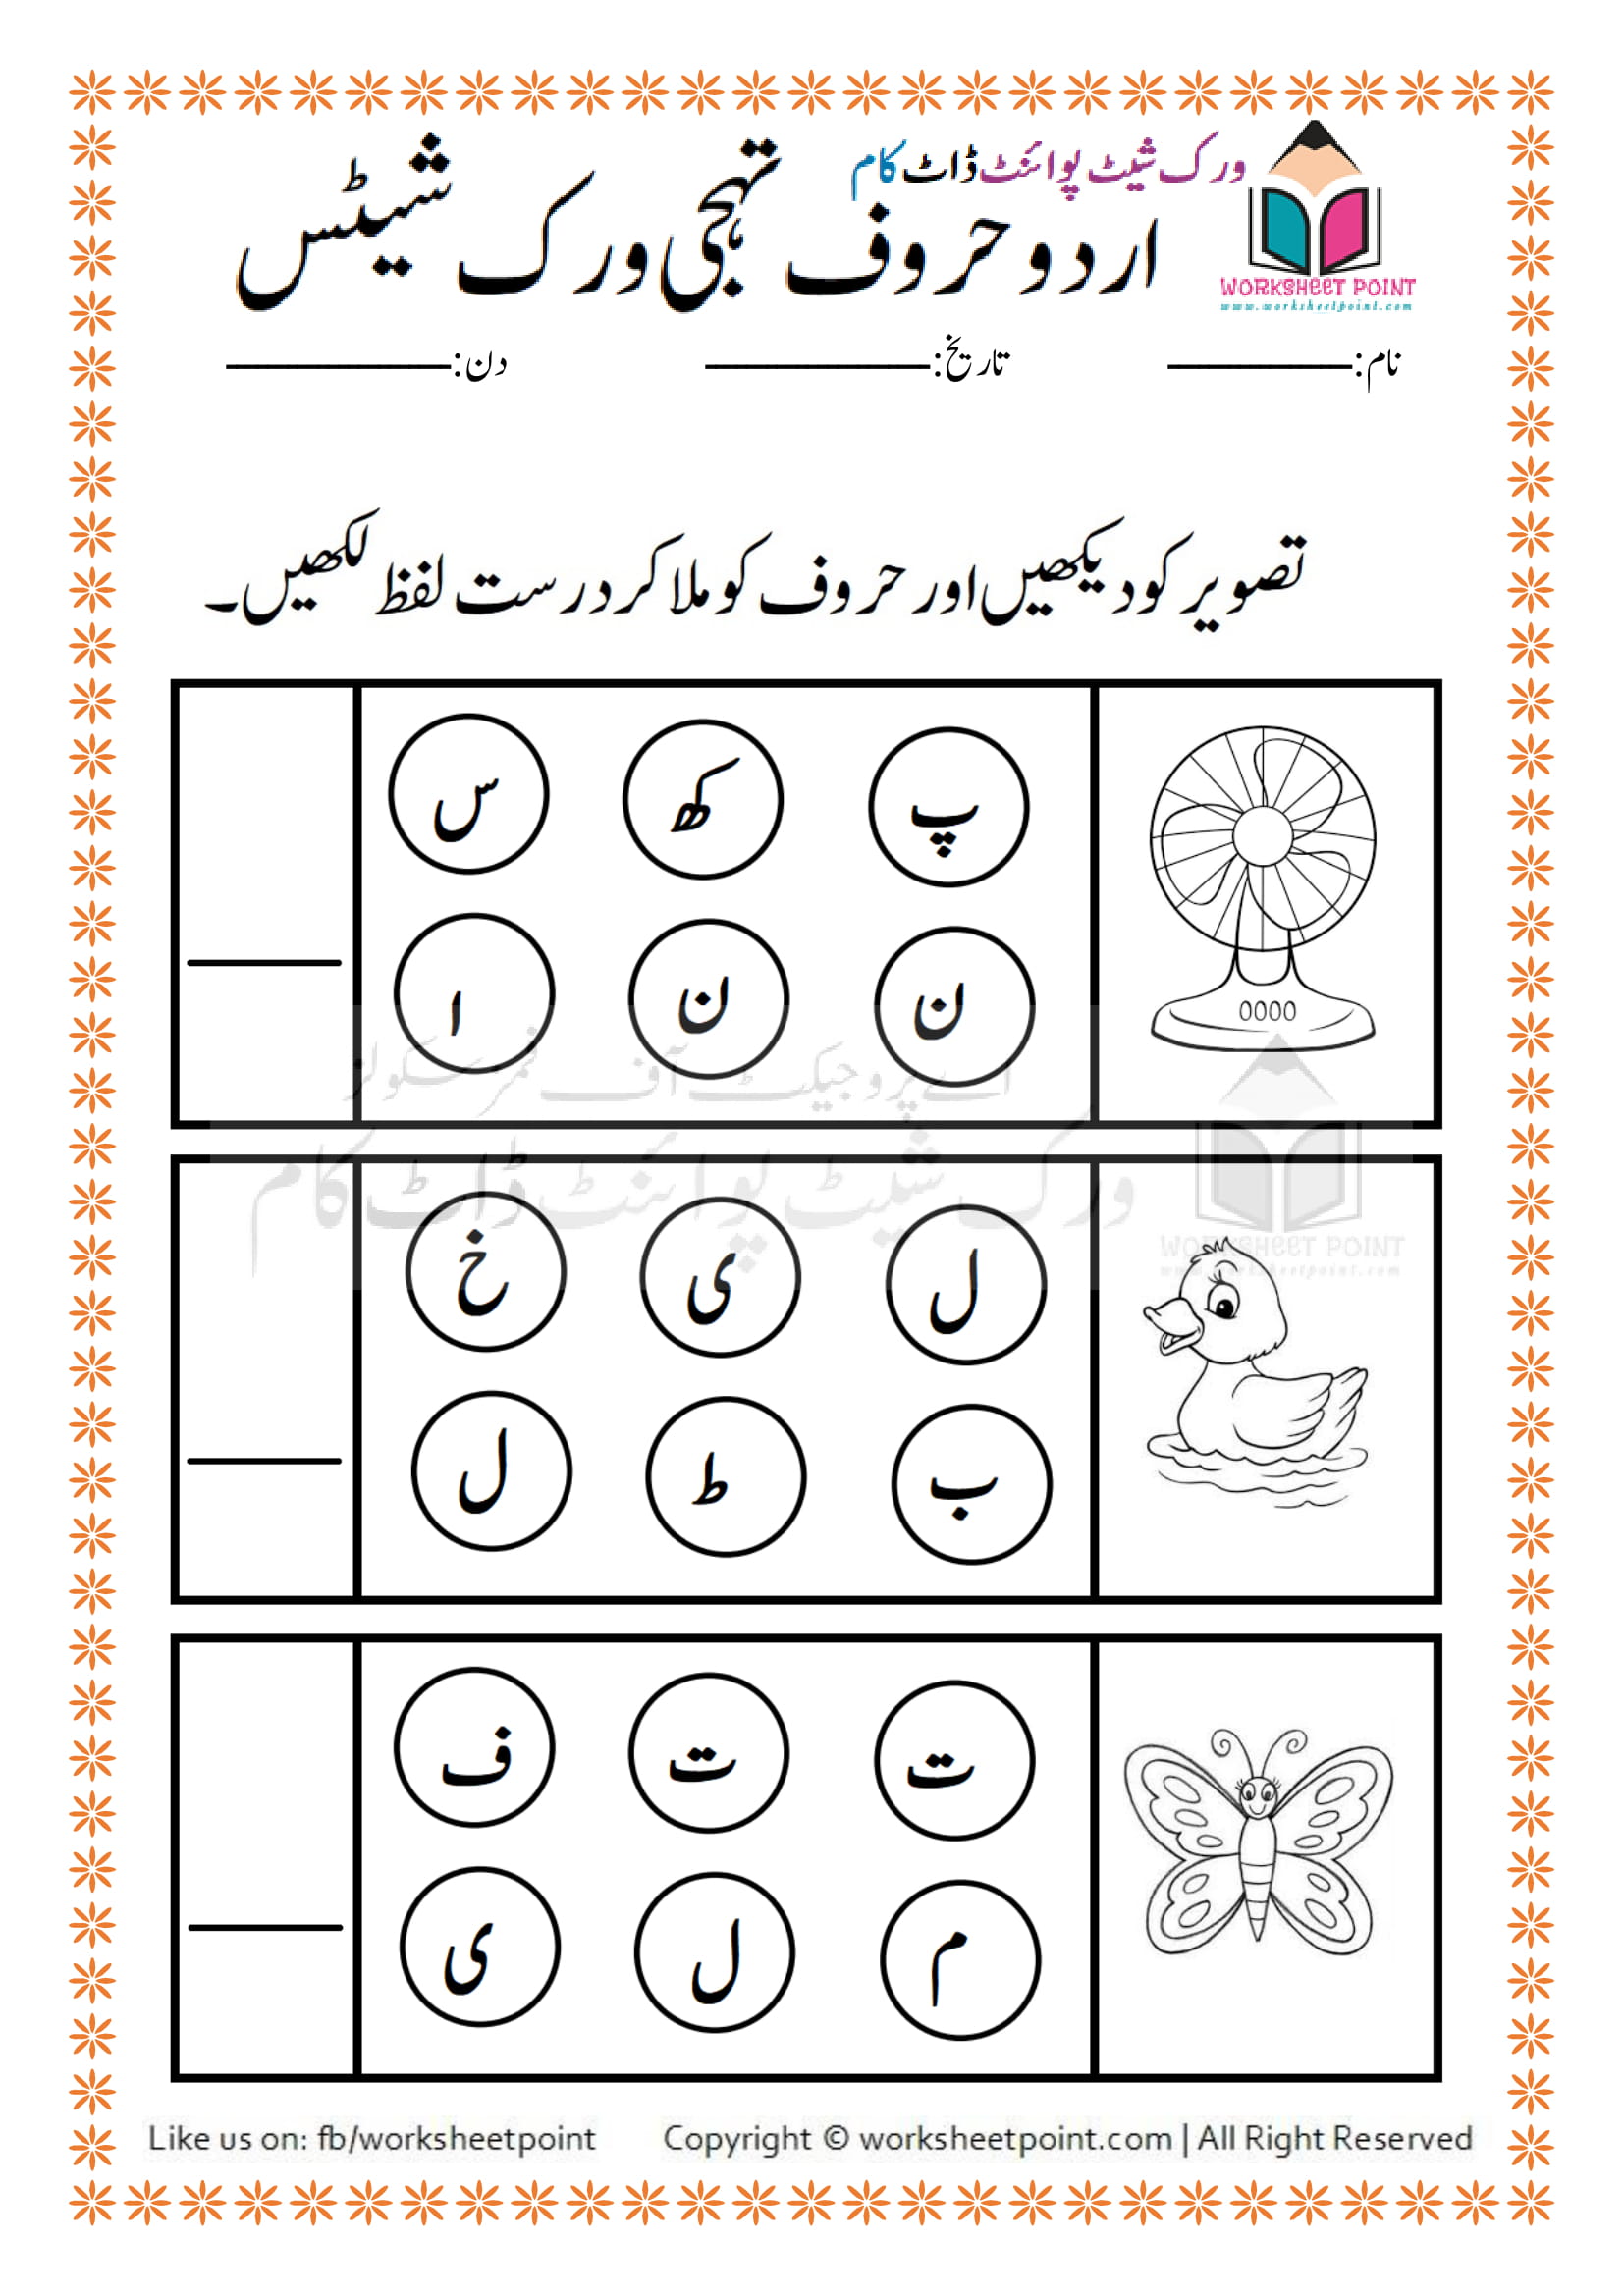 Urdu alphabets activities - Worksheet Point